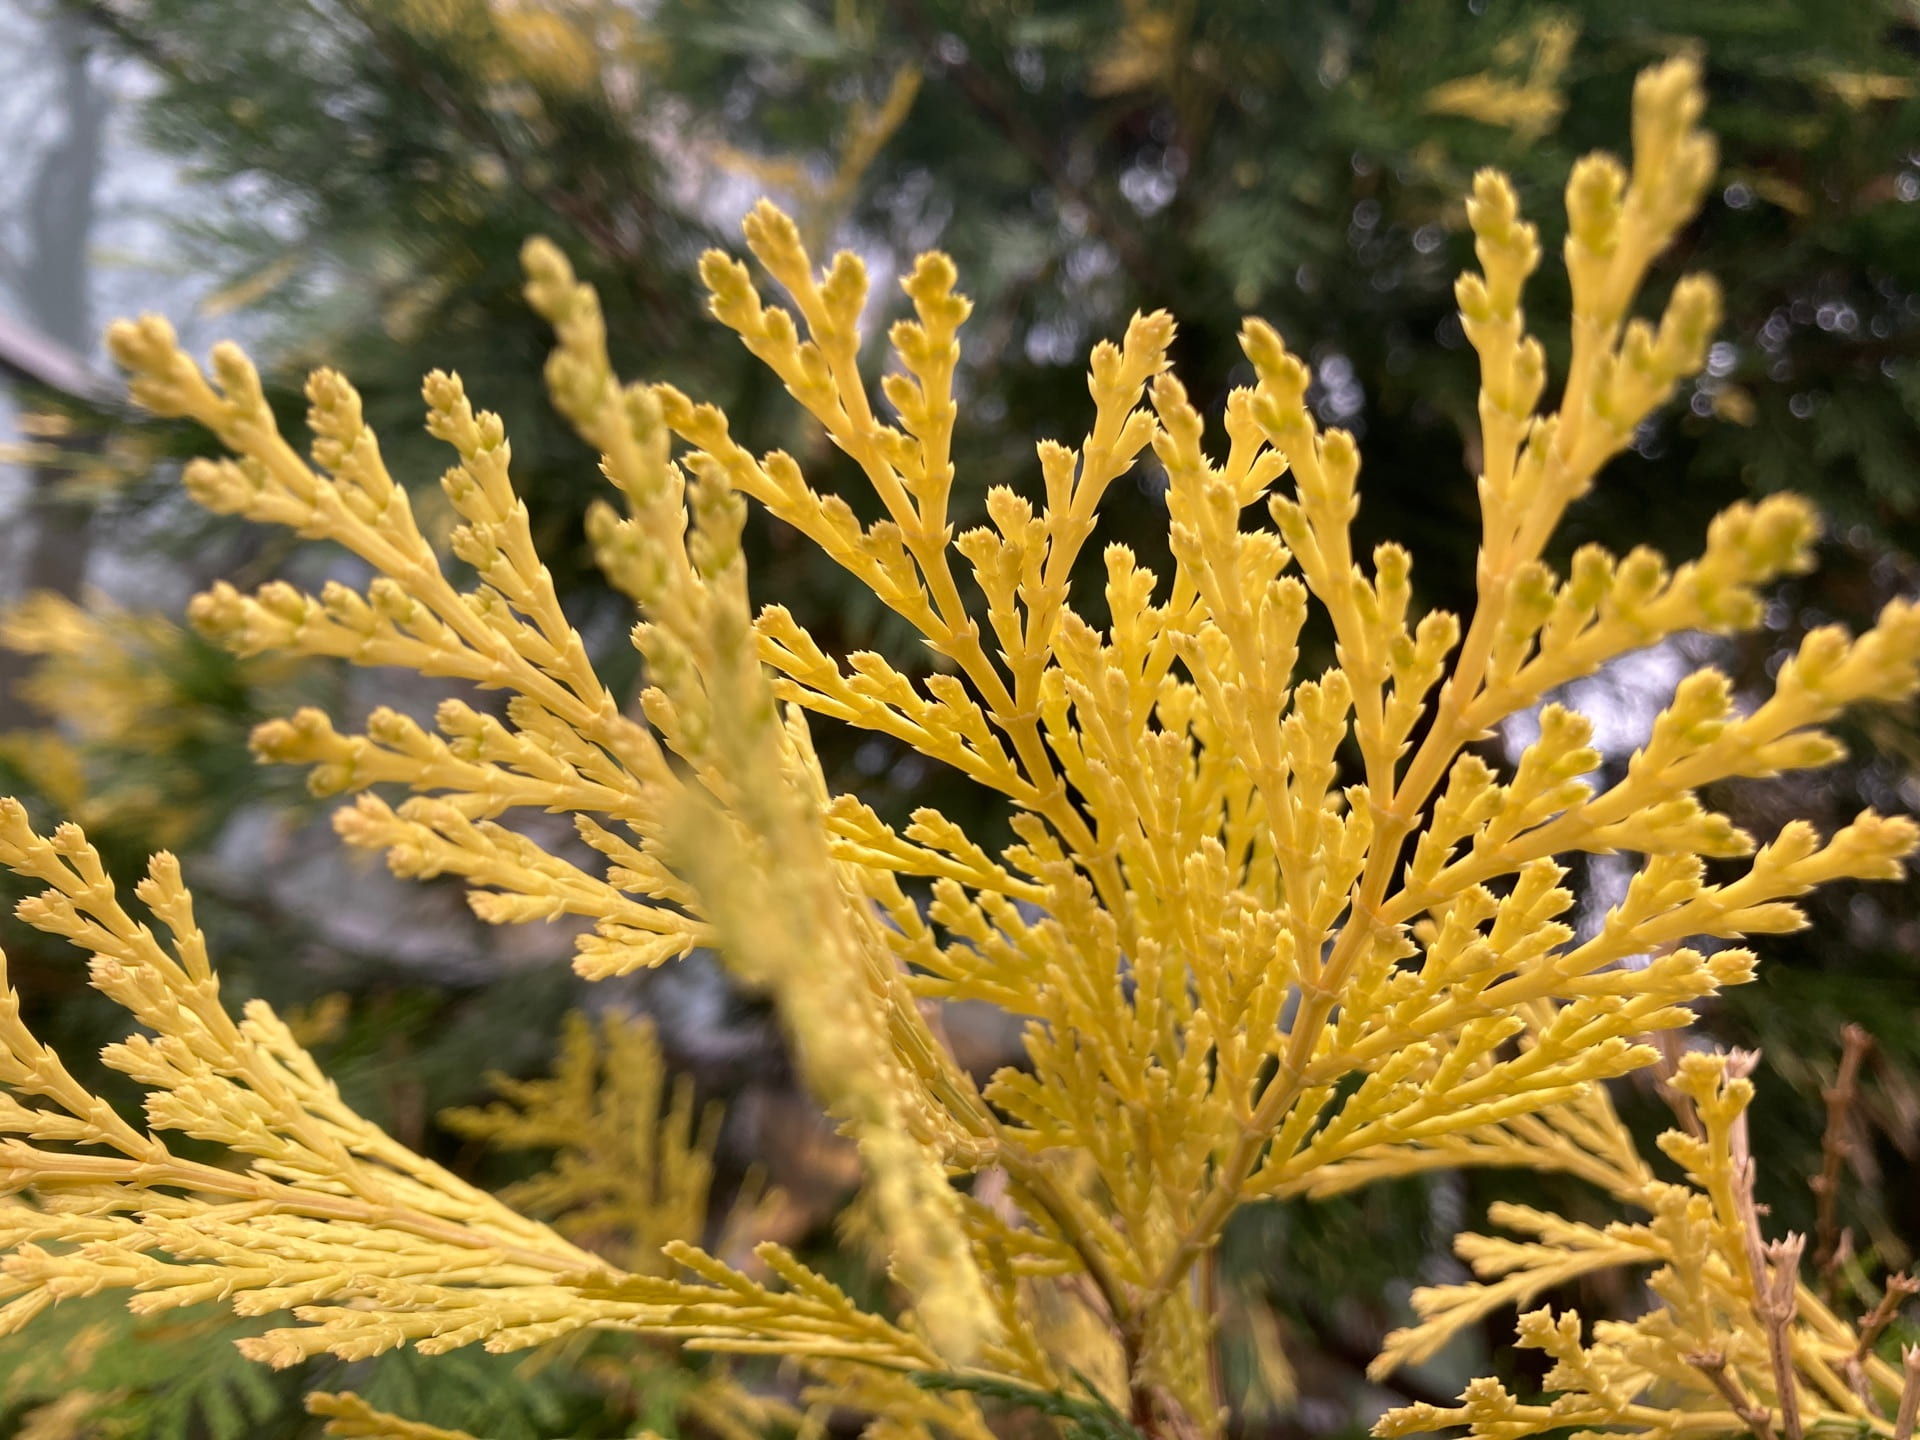 The foliage variegation on Calocedrus decurrens 'Aureovariegata' is bright yellow.